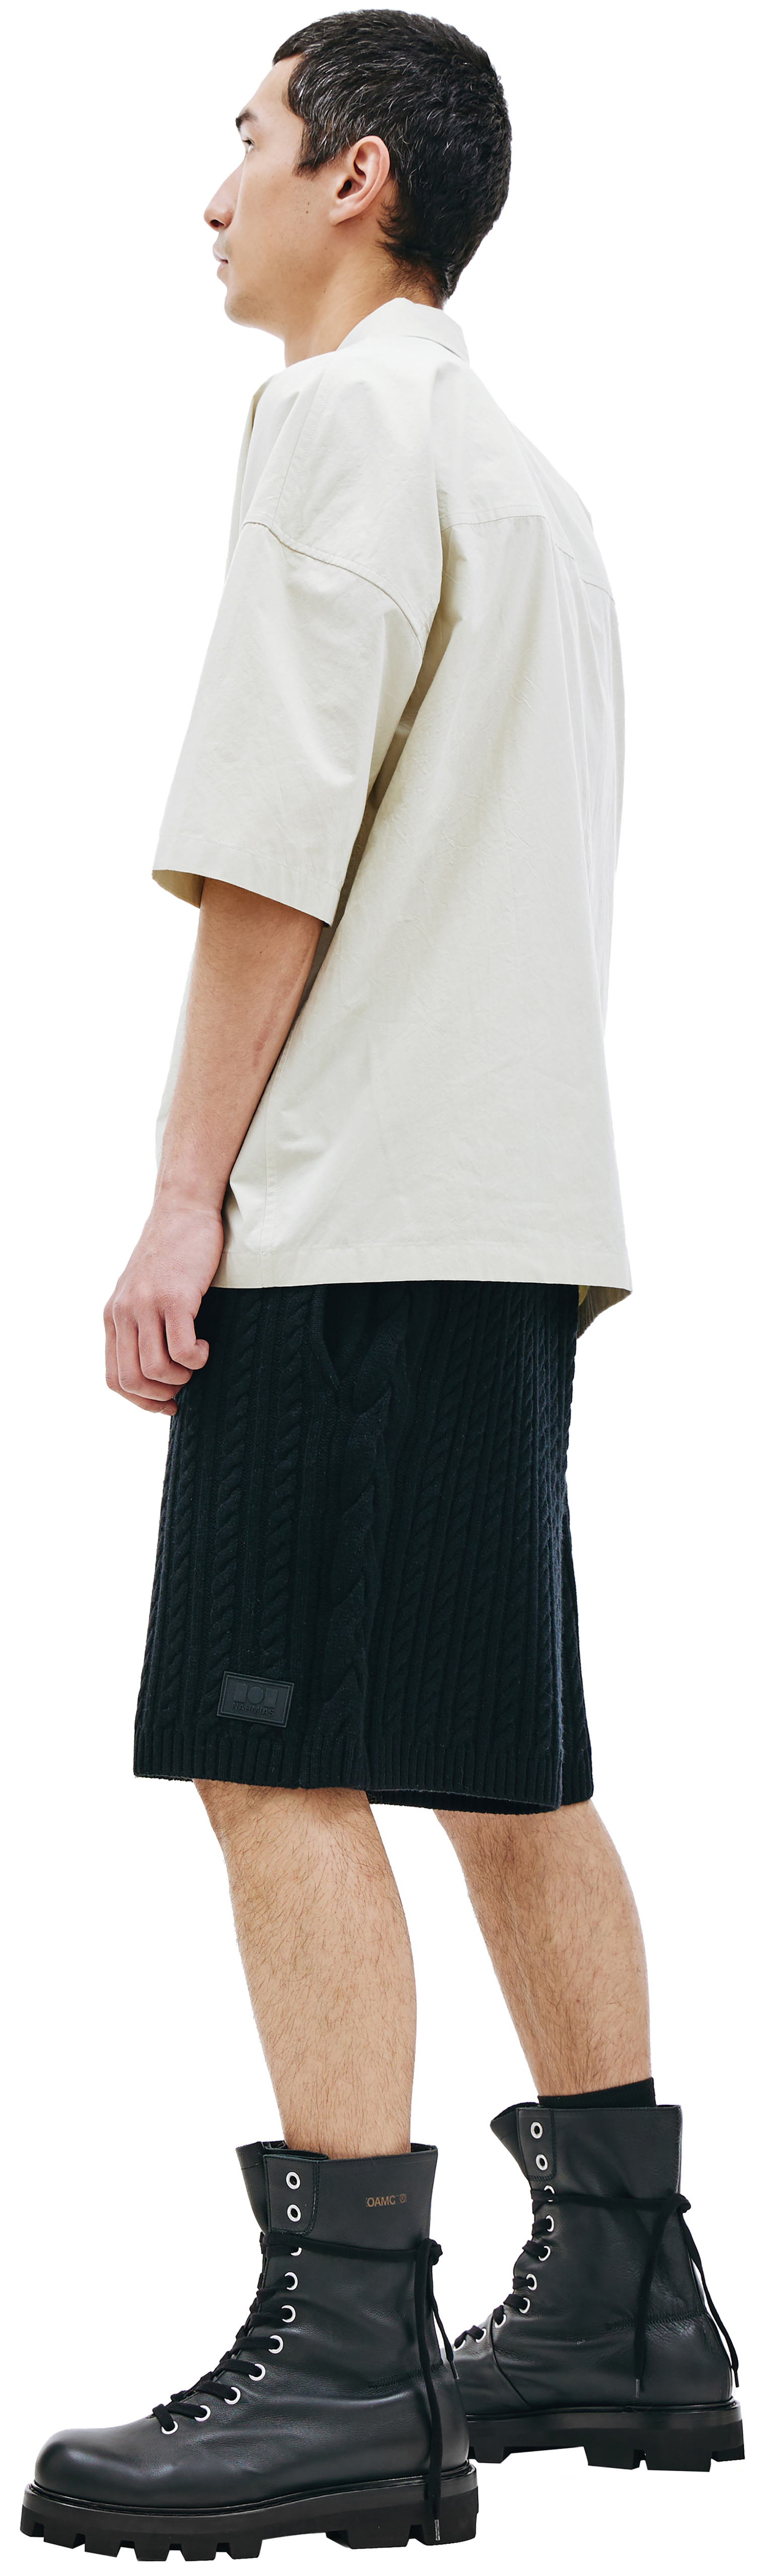 Buy Jil Sander men beige zip up short sleeve shirt for $720 online 